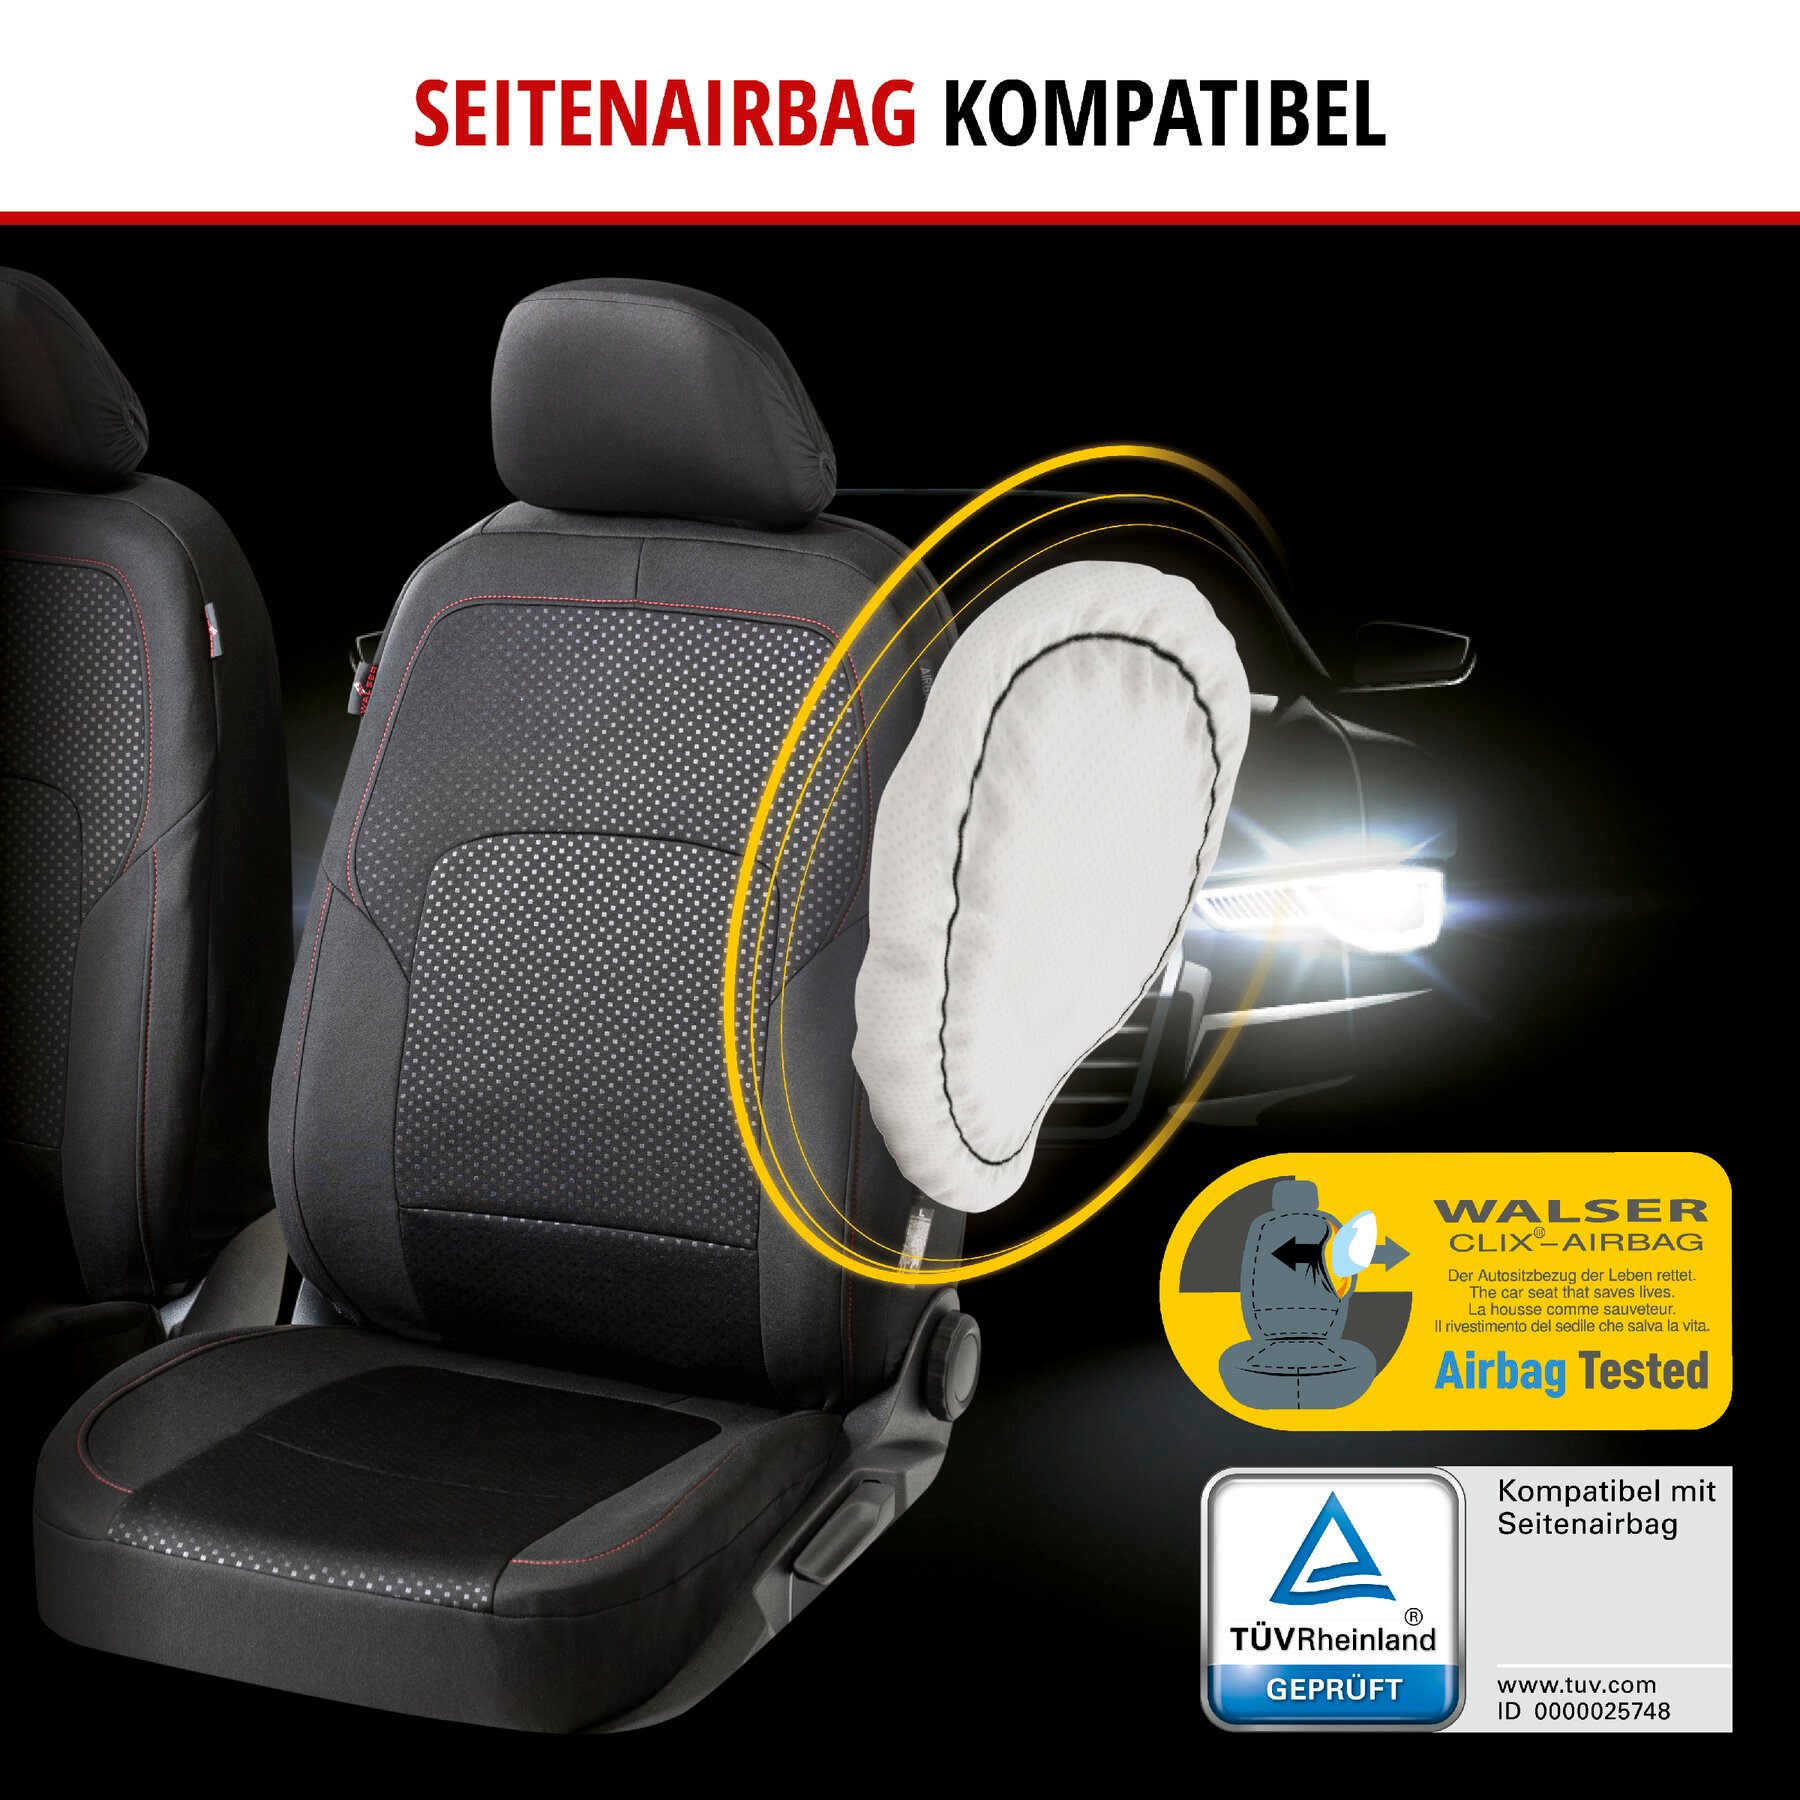 Autositzbezug ZIPP-IT Premium Logan, PKW-Schonbezüge Komplettset mit Reißverschluss-System schwarz/rot